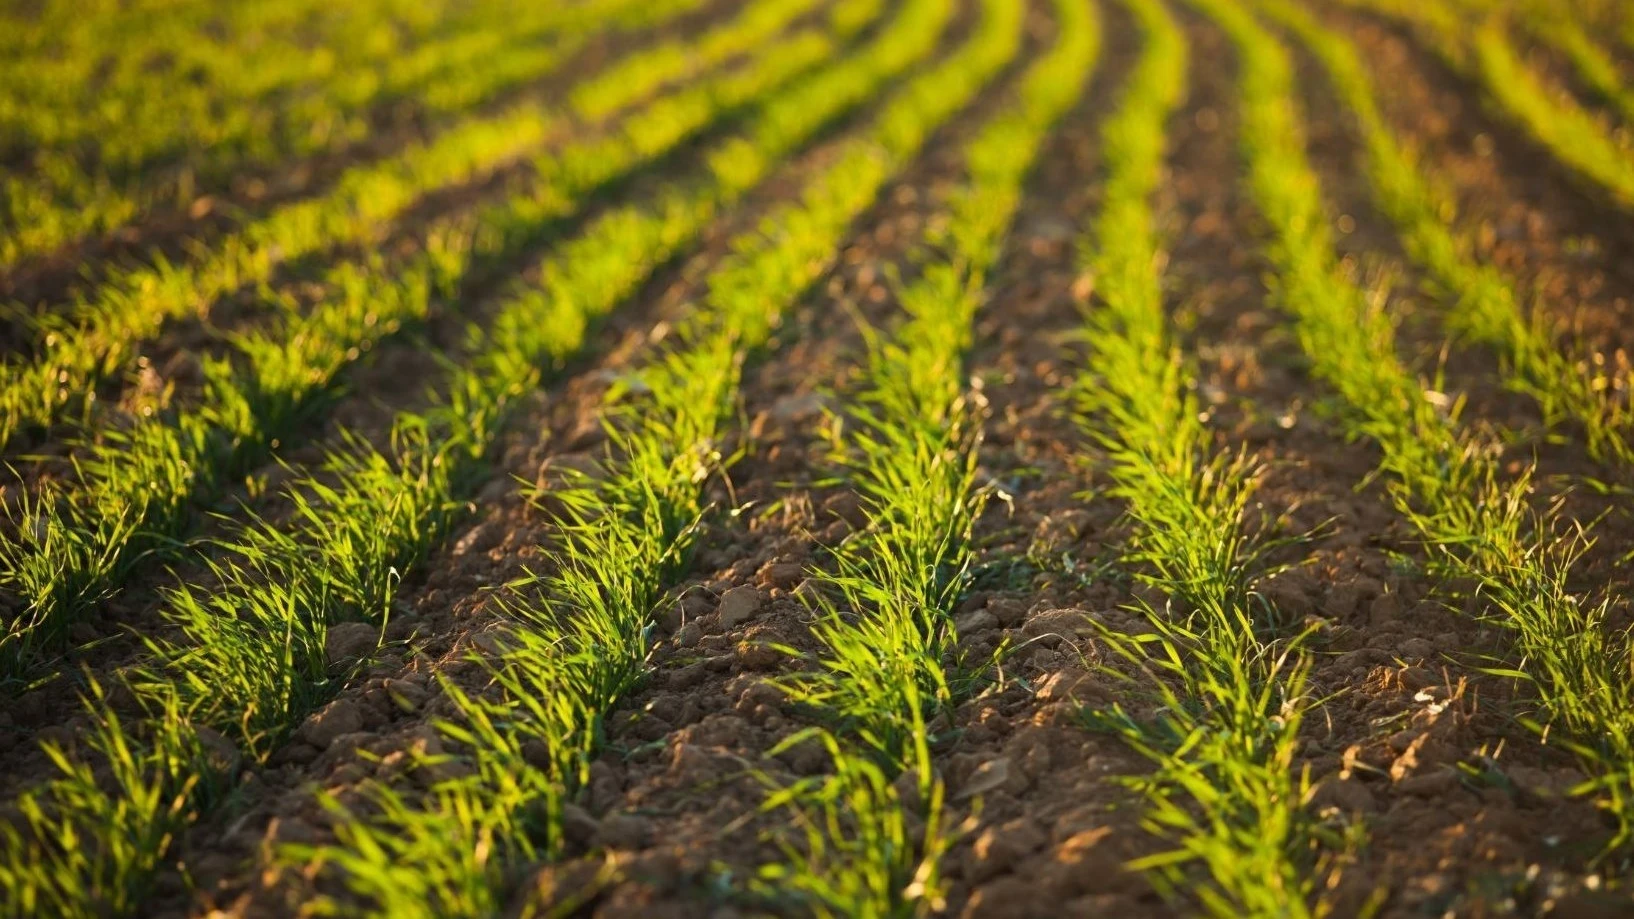 Climate-smart farming yields plenty, despite the demanding preconditions